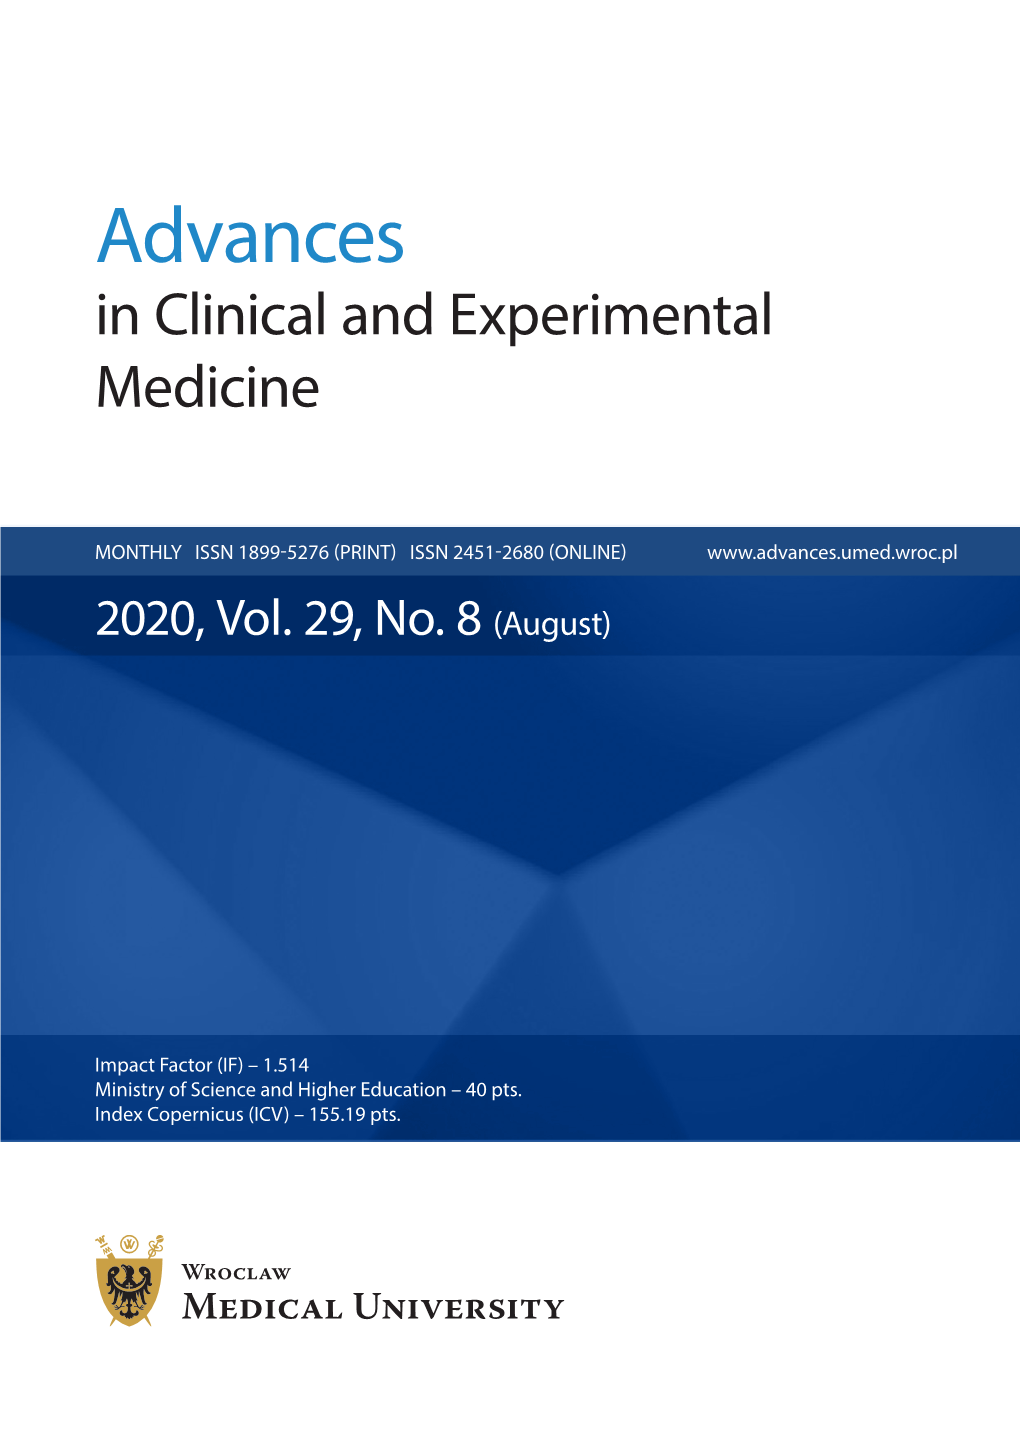 Advances in Clinical and Experimental Medicine 2020, Vol